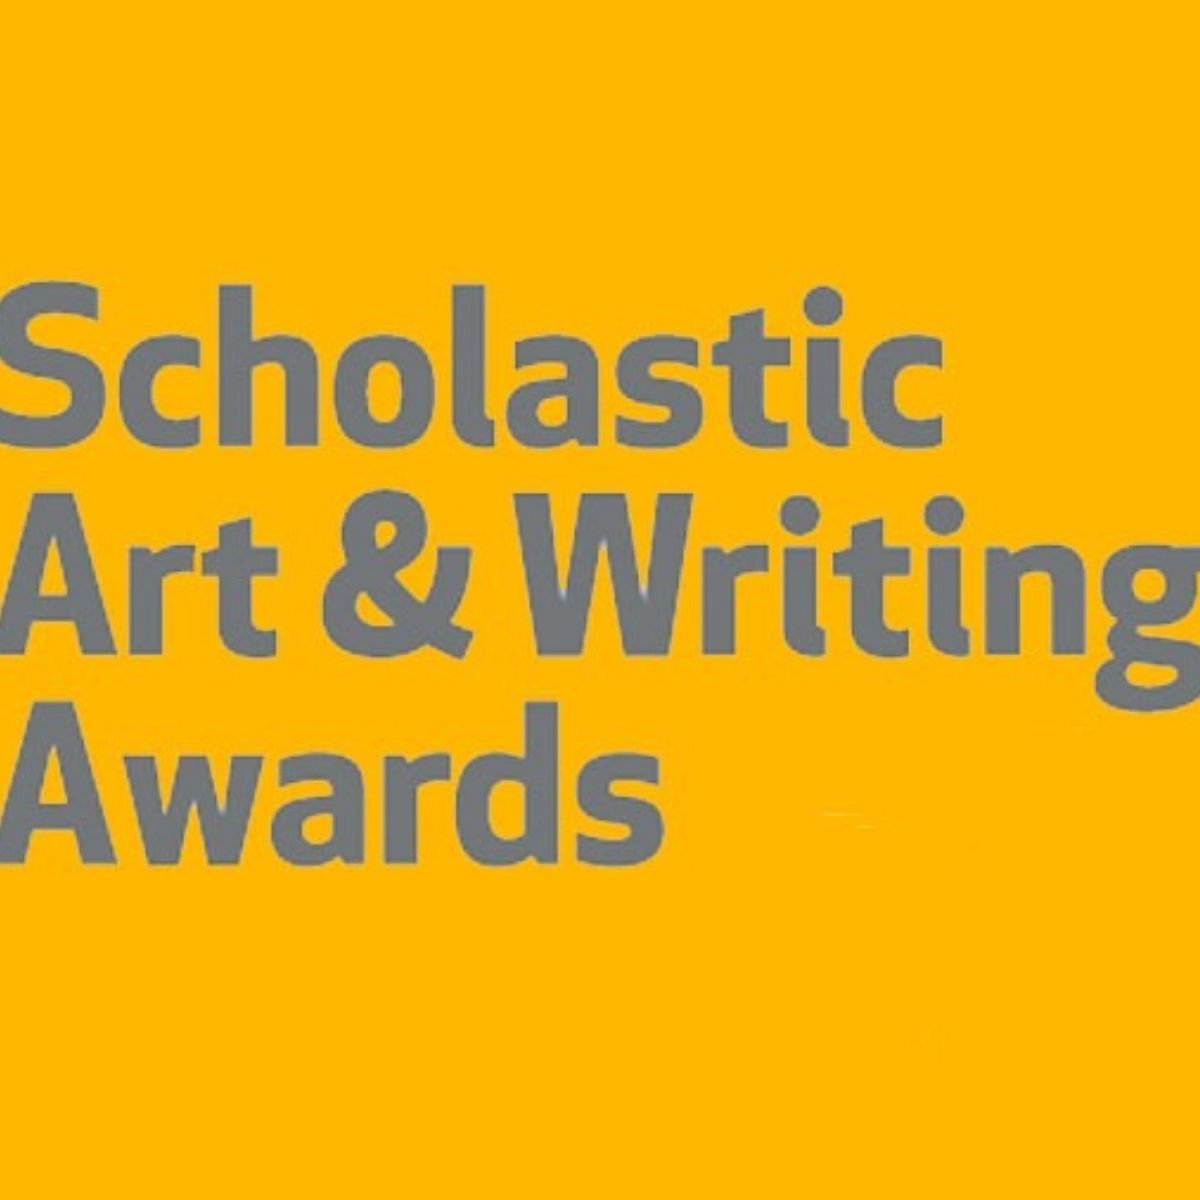 Scholastic Art & Writing Awards Winners 2021 News Post